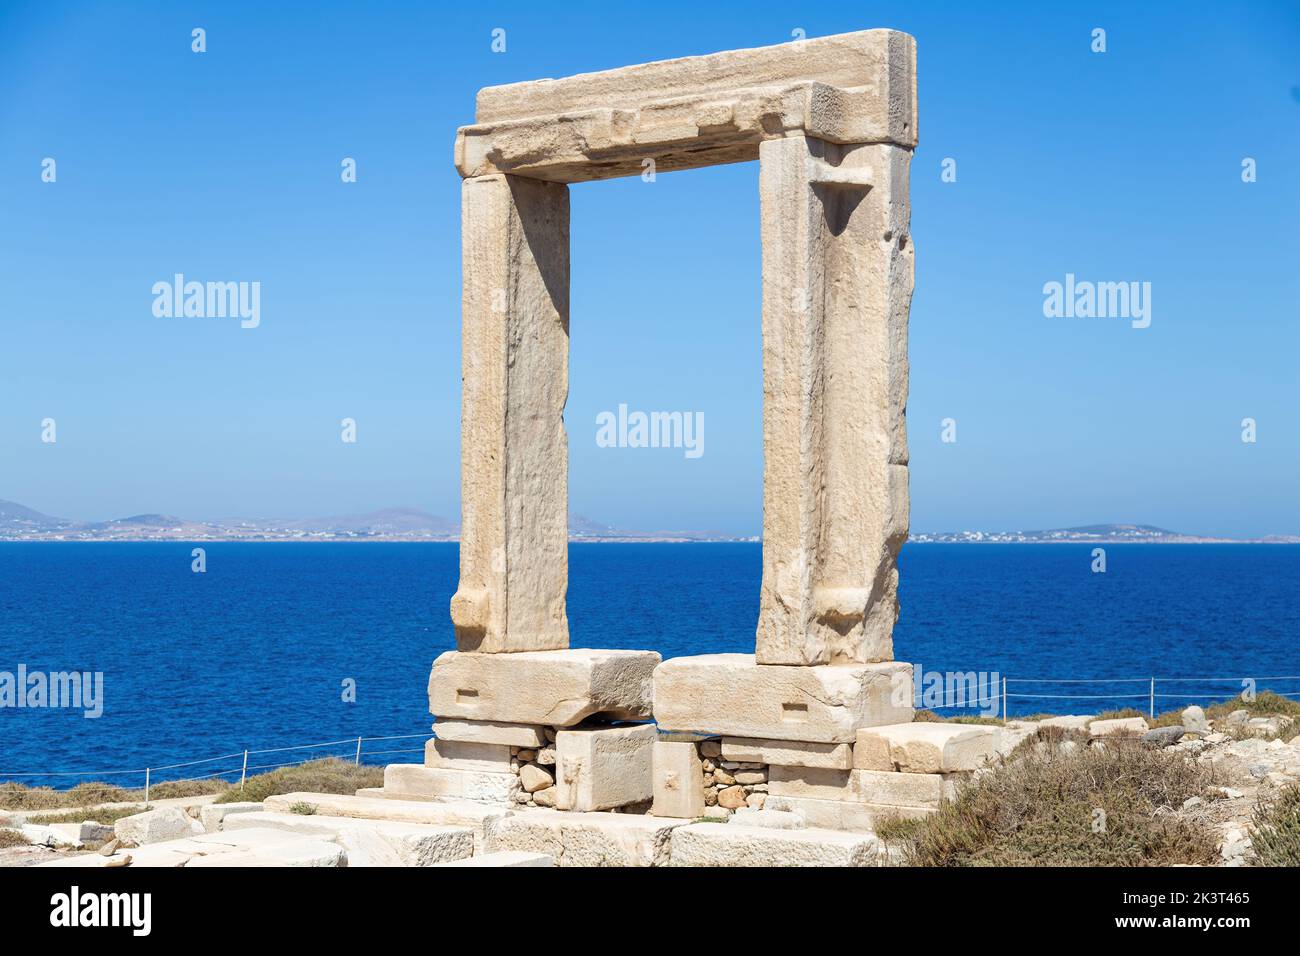 Insel Naxos, Apollotempel, Kykladen Griechenland. Portara, Marmortor, sonniger Tag, ruhiges Meer, blauer Himmel im Hintergrund. Stockfoto